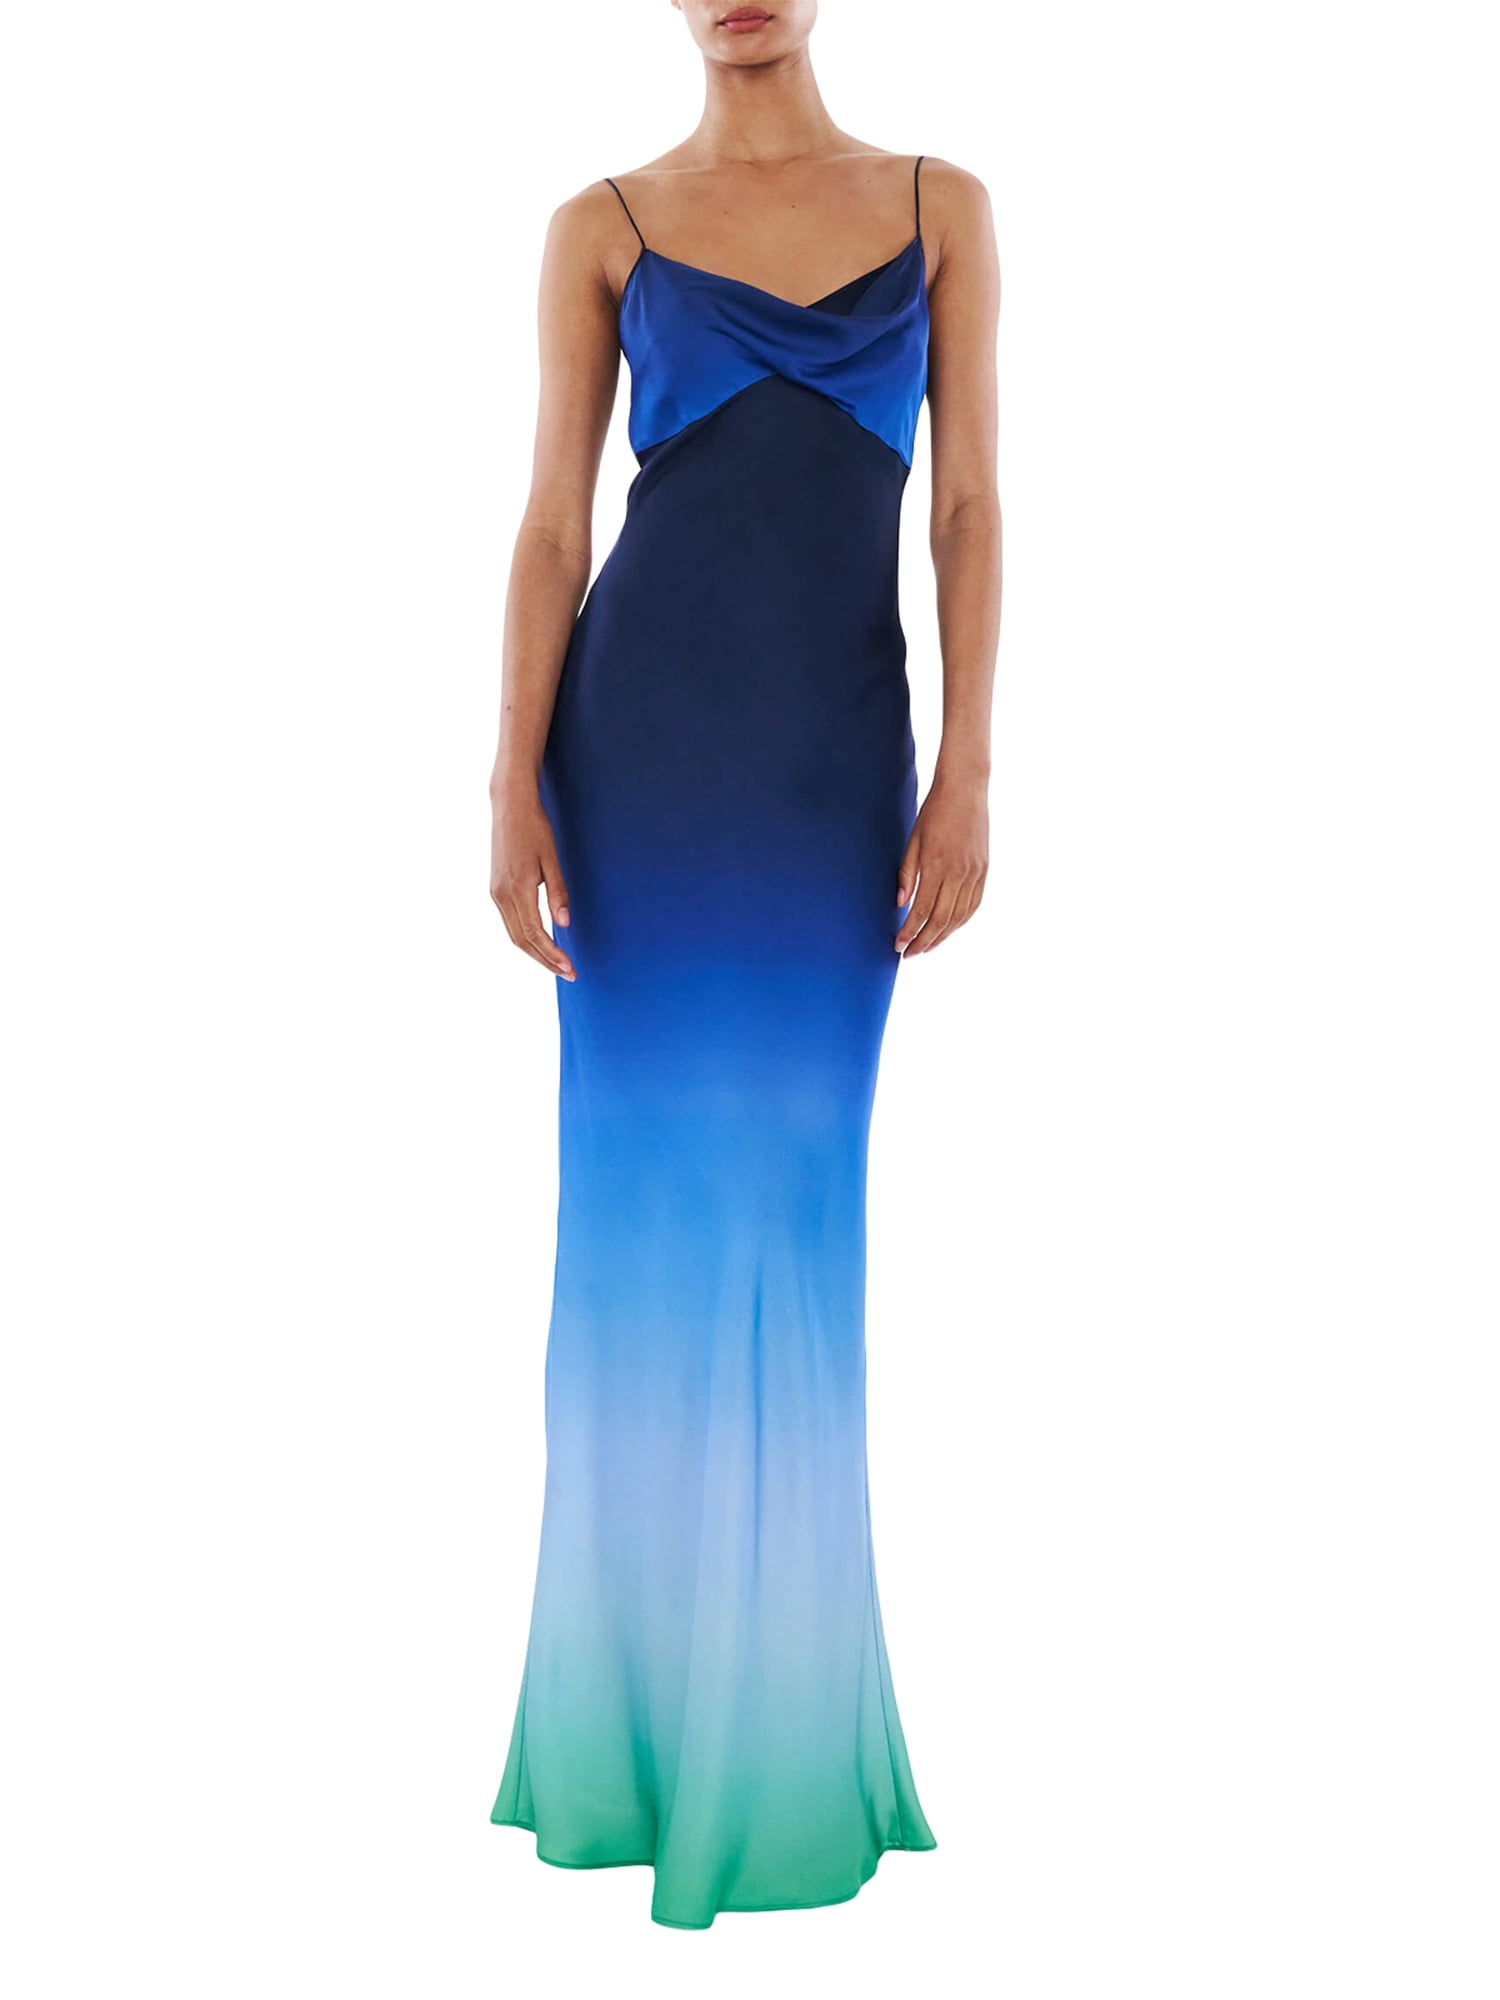 Suity Women's Summer Slip Dress Blue Gradient Print Spaghetti Strap ...